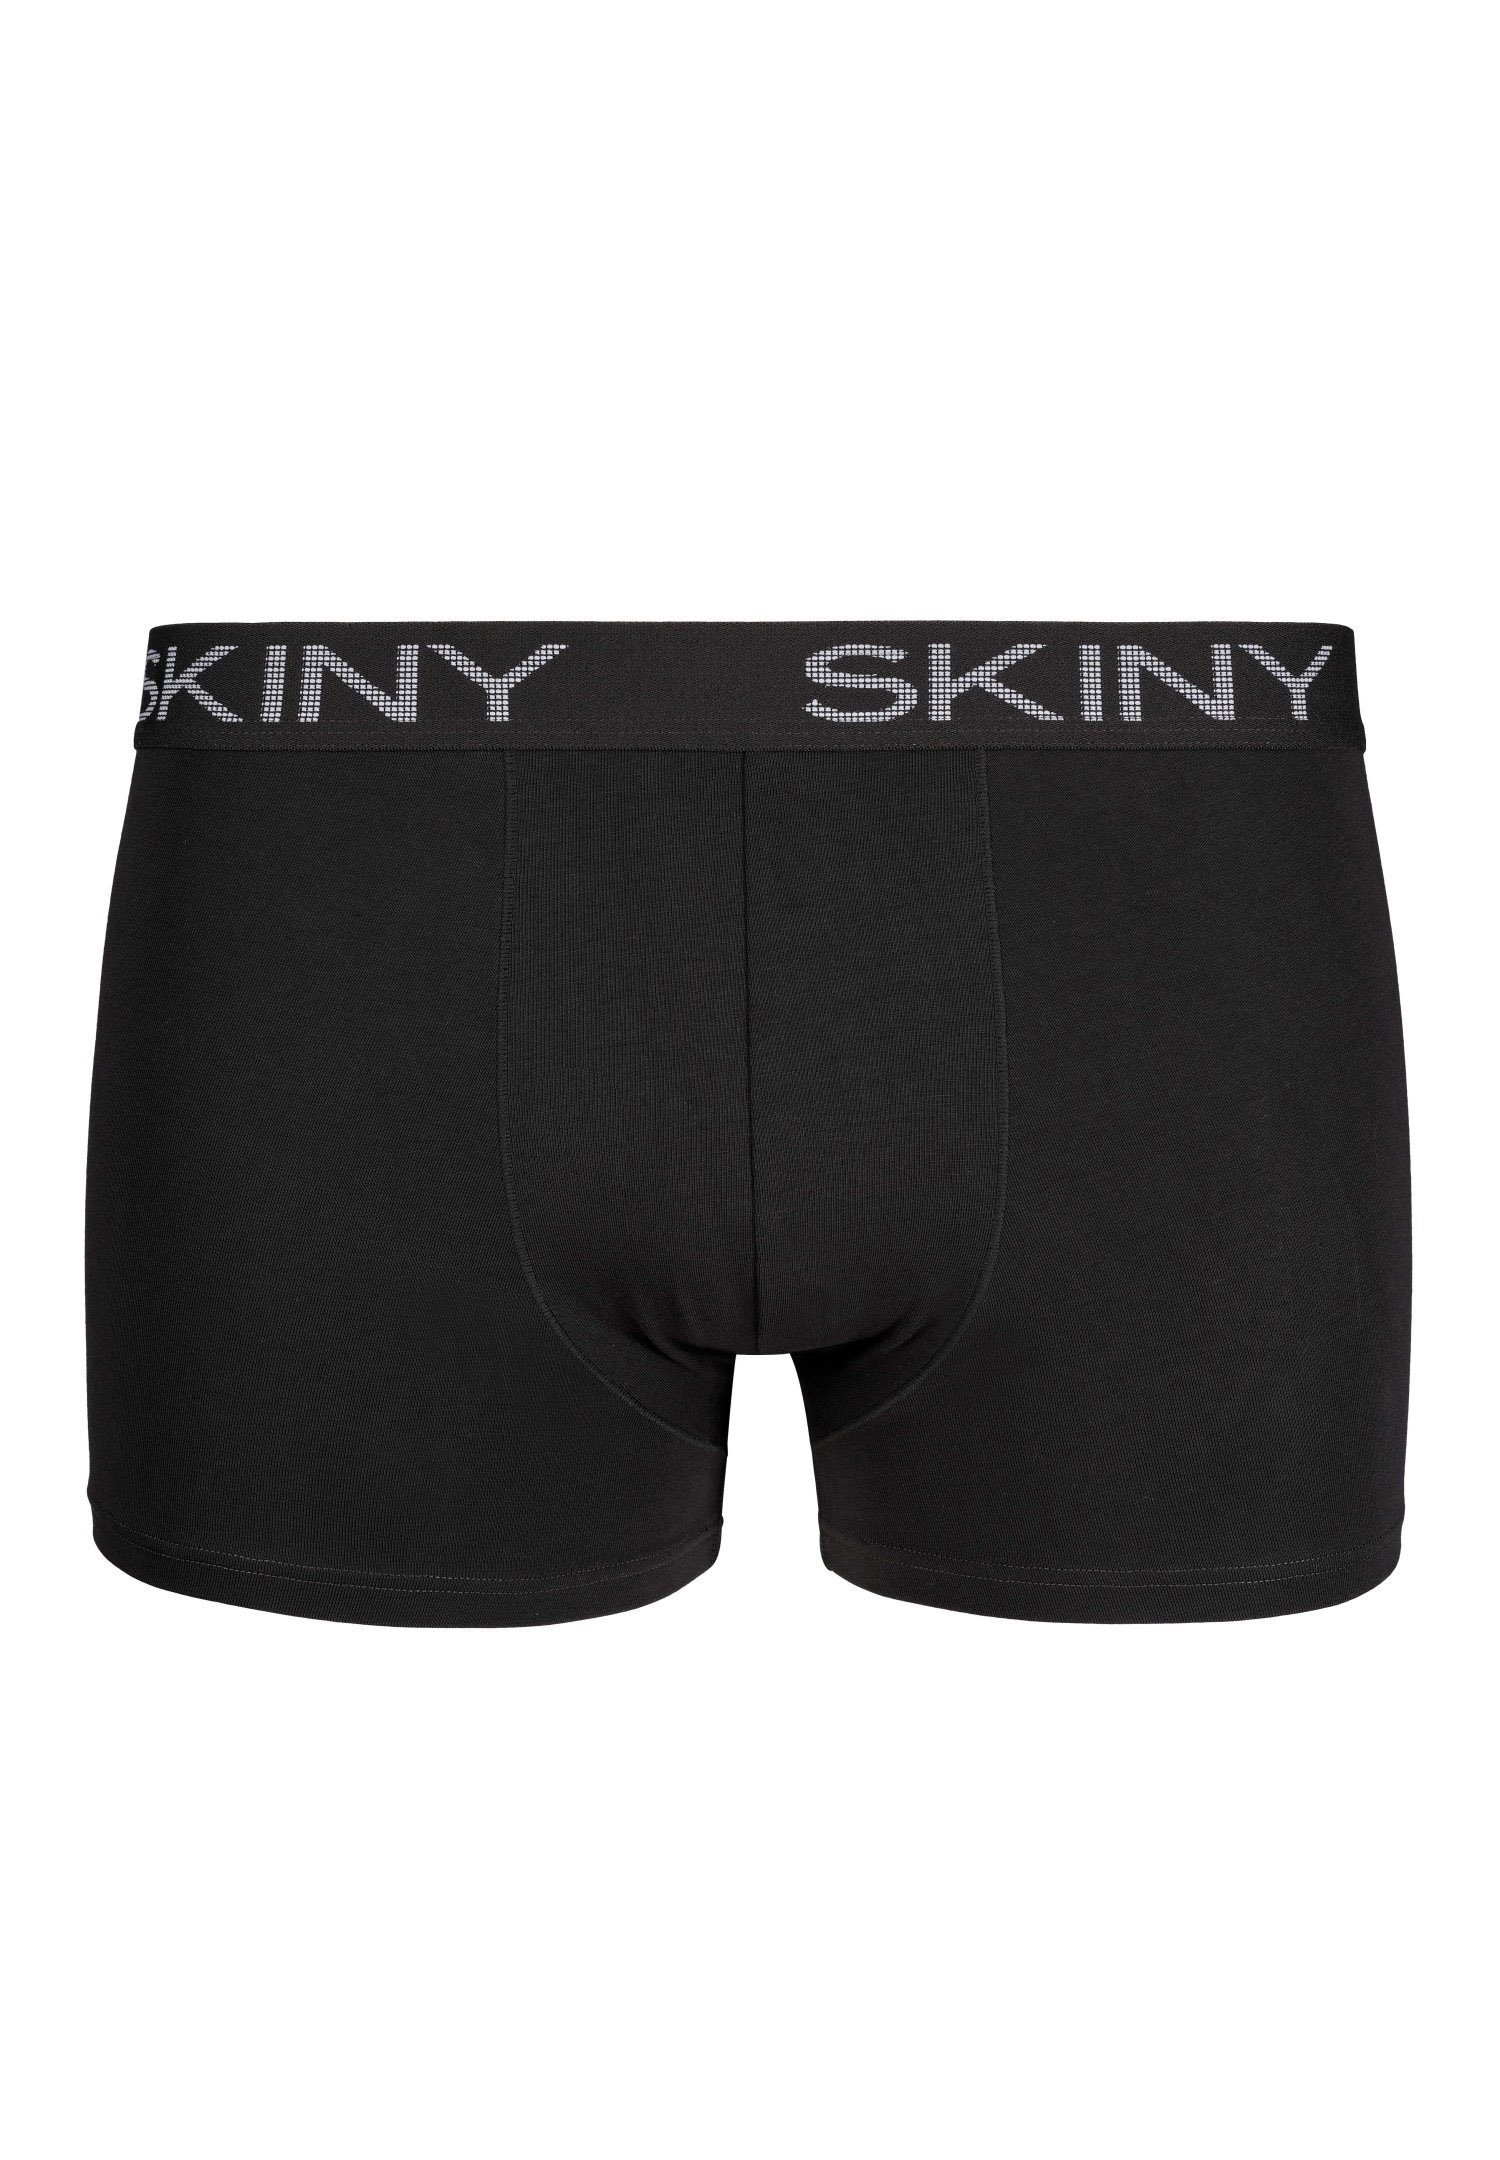 Pants Skiny Retro (2-St) Hilltops Selection